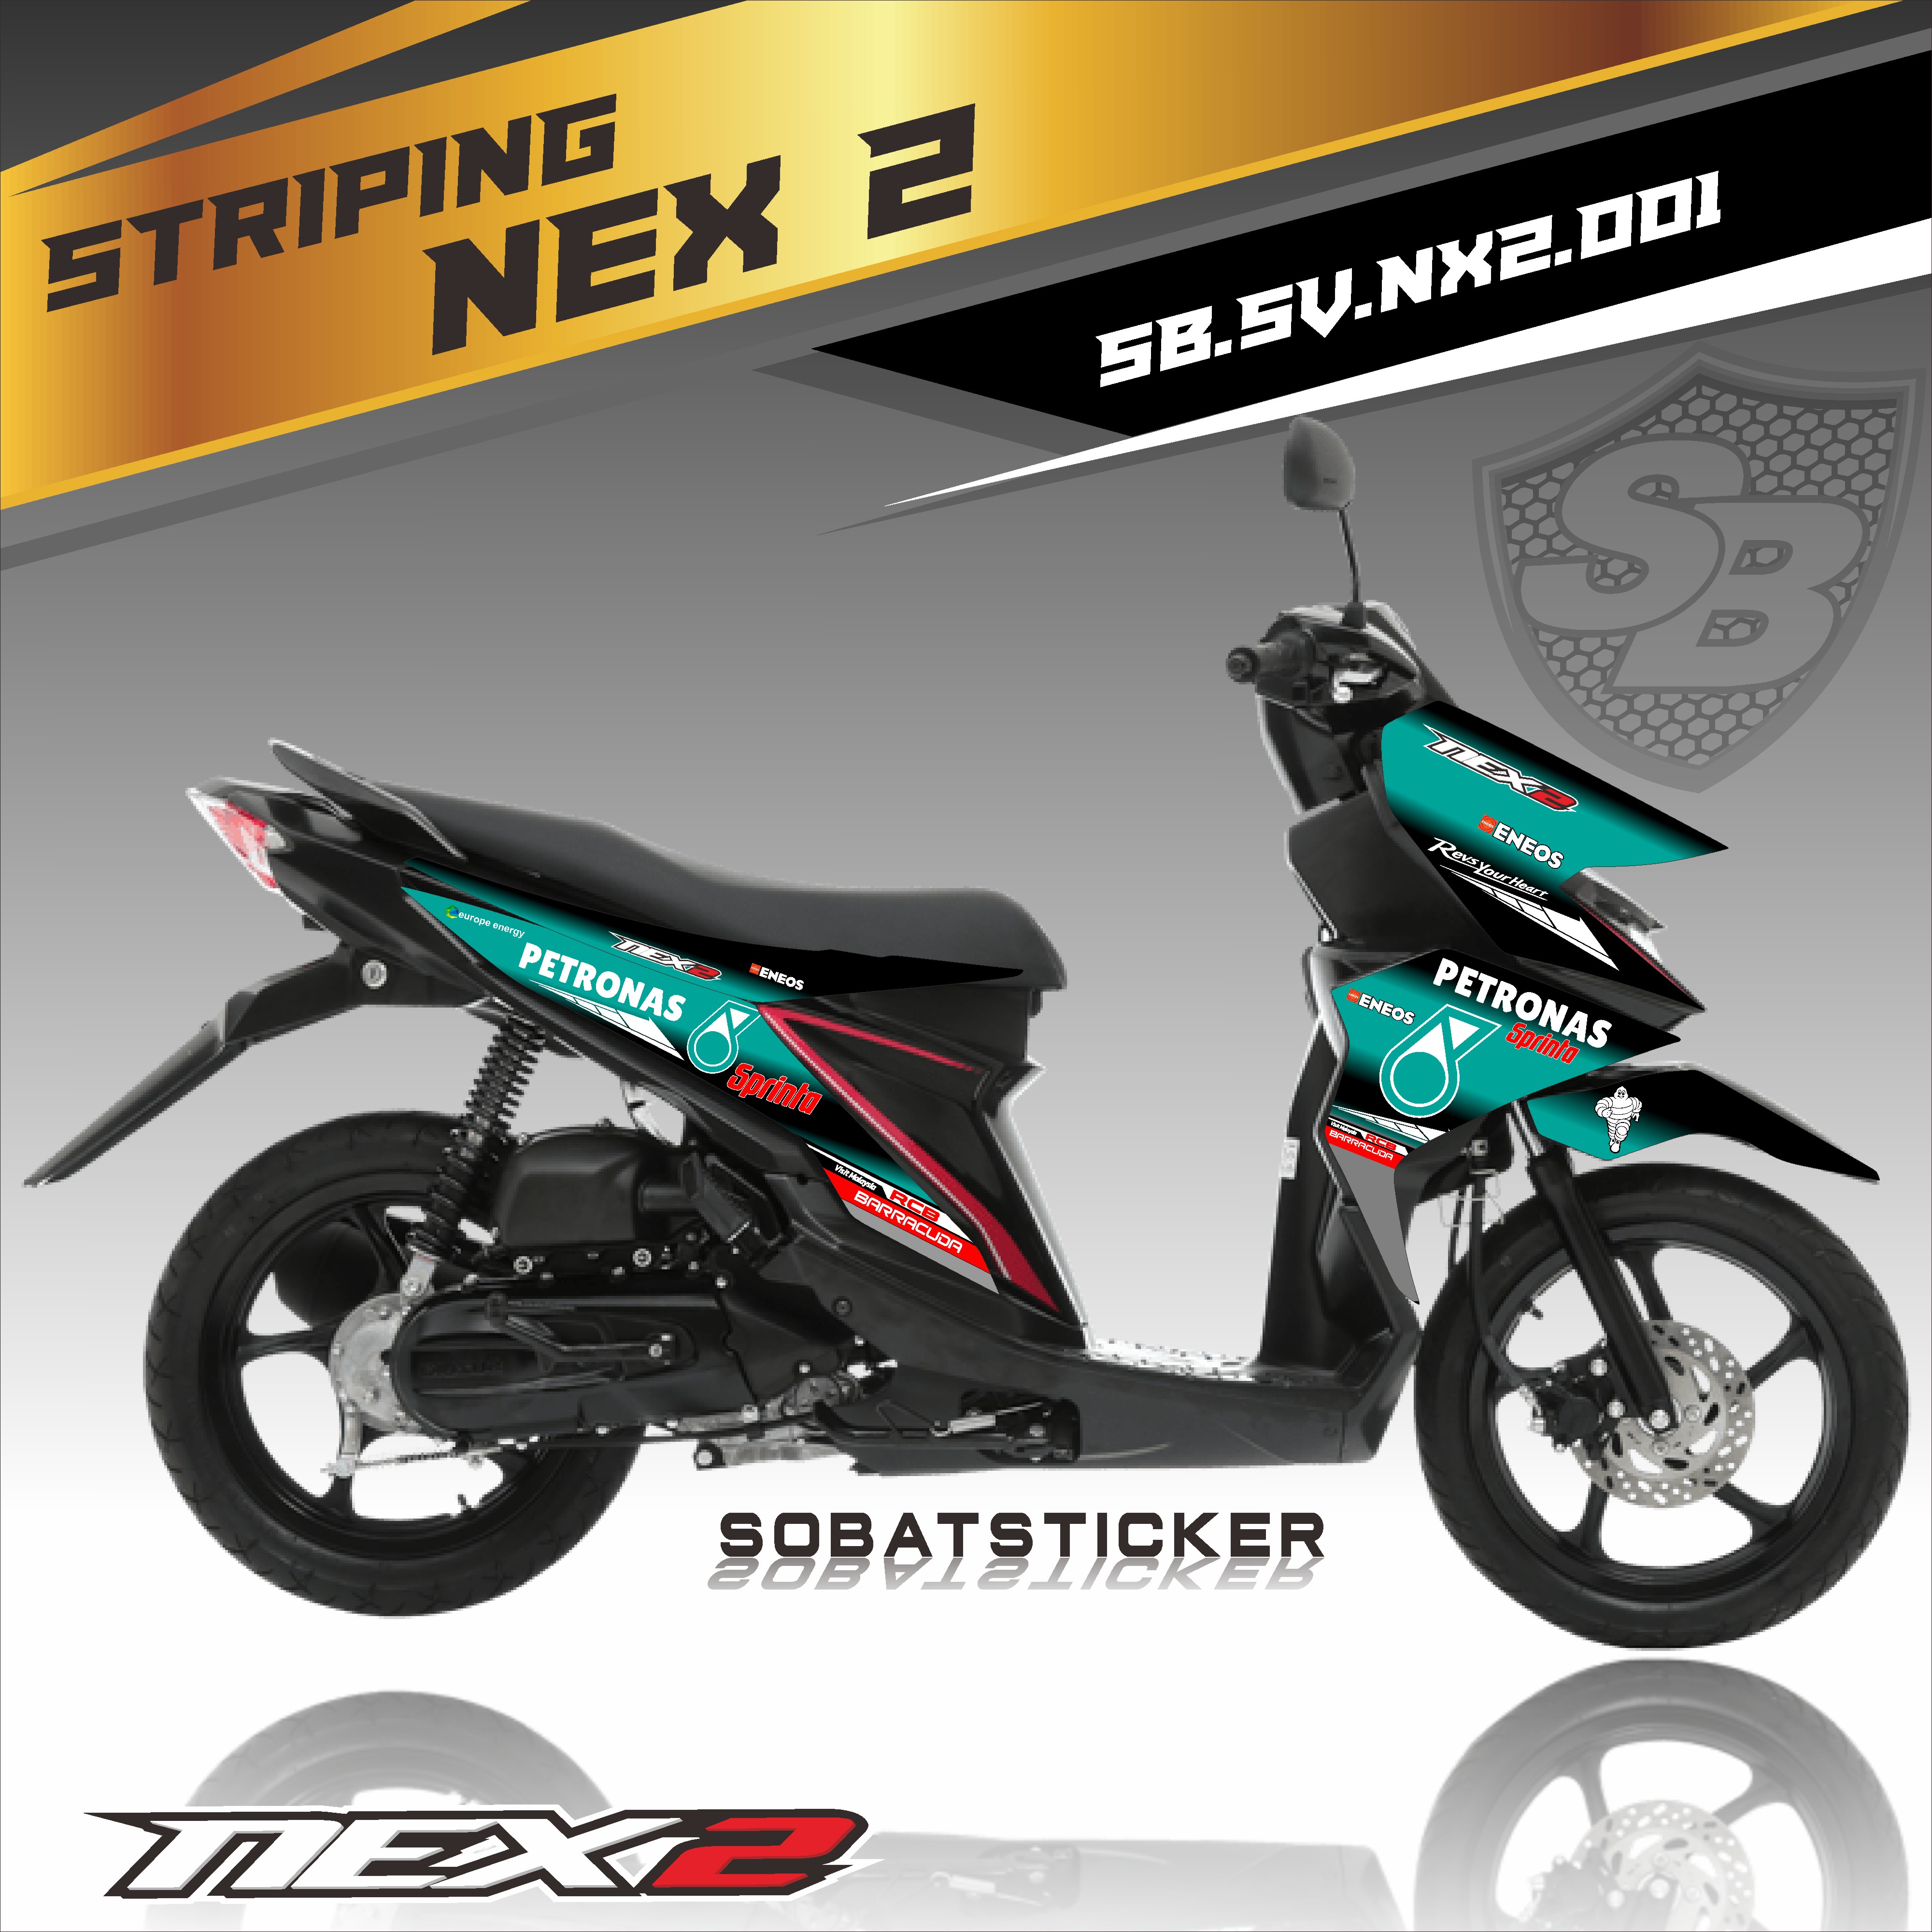 STRIPING NEX 2 Sticker Striping Variasi List SUZUKI NEX 2 001 Lazada Indonesia